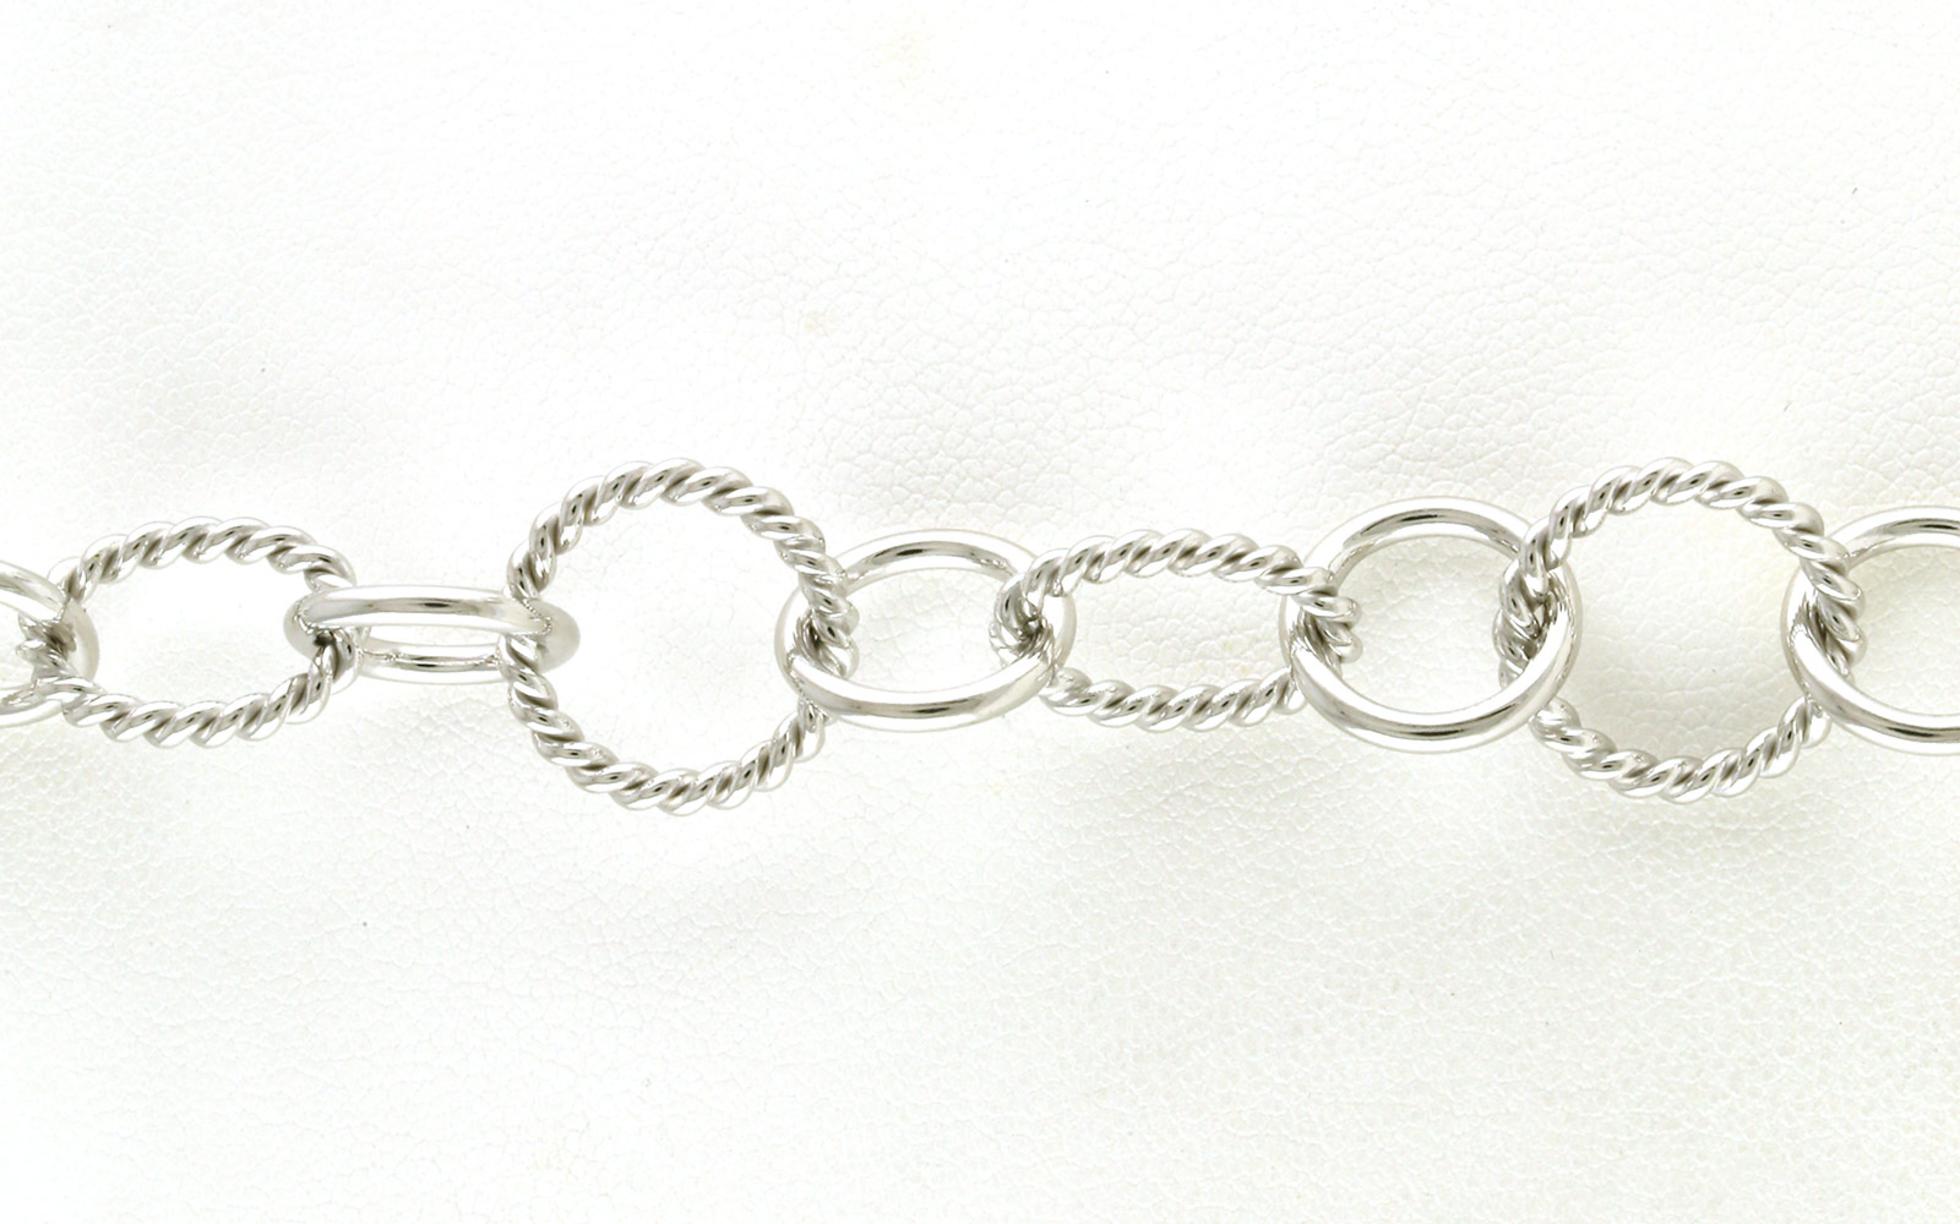 Alternating Rope and Polished Link Bracelet in Sterling Silver